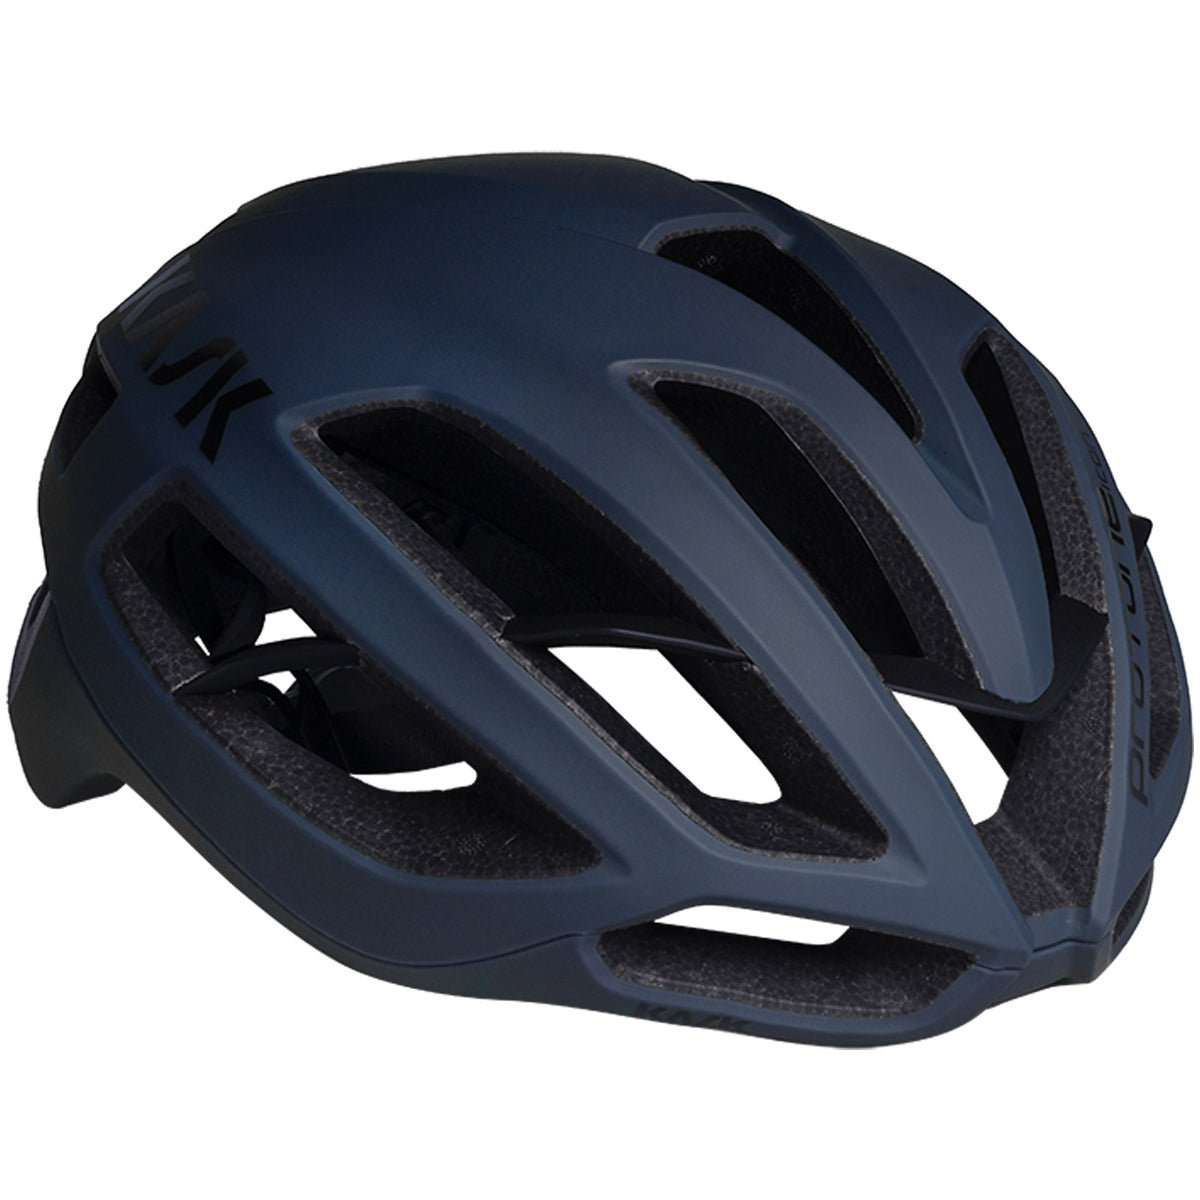 Kask Protone Icon helmet - Matt blue All4cycling